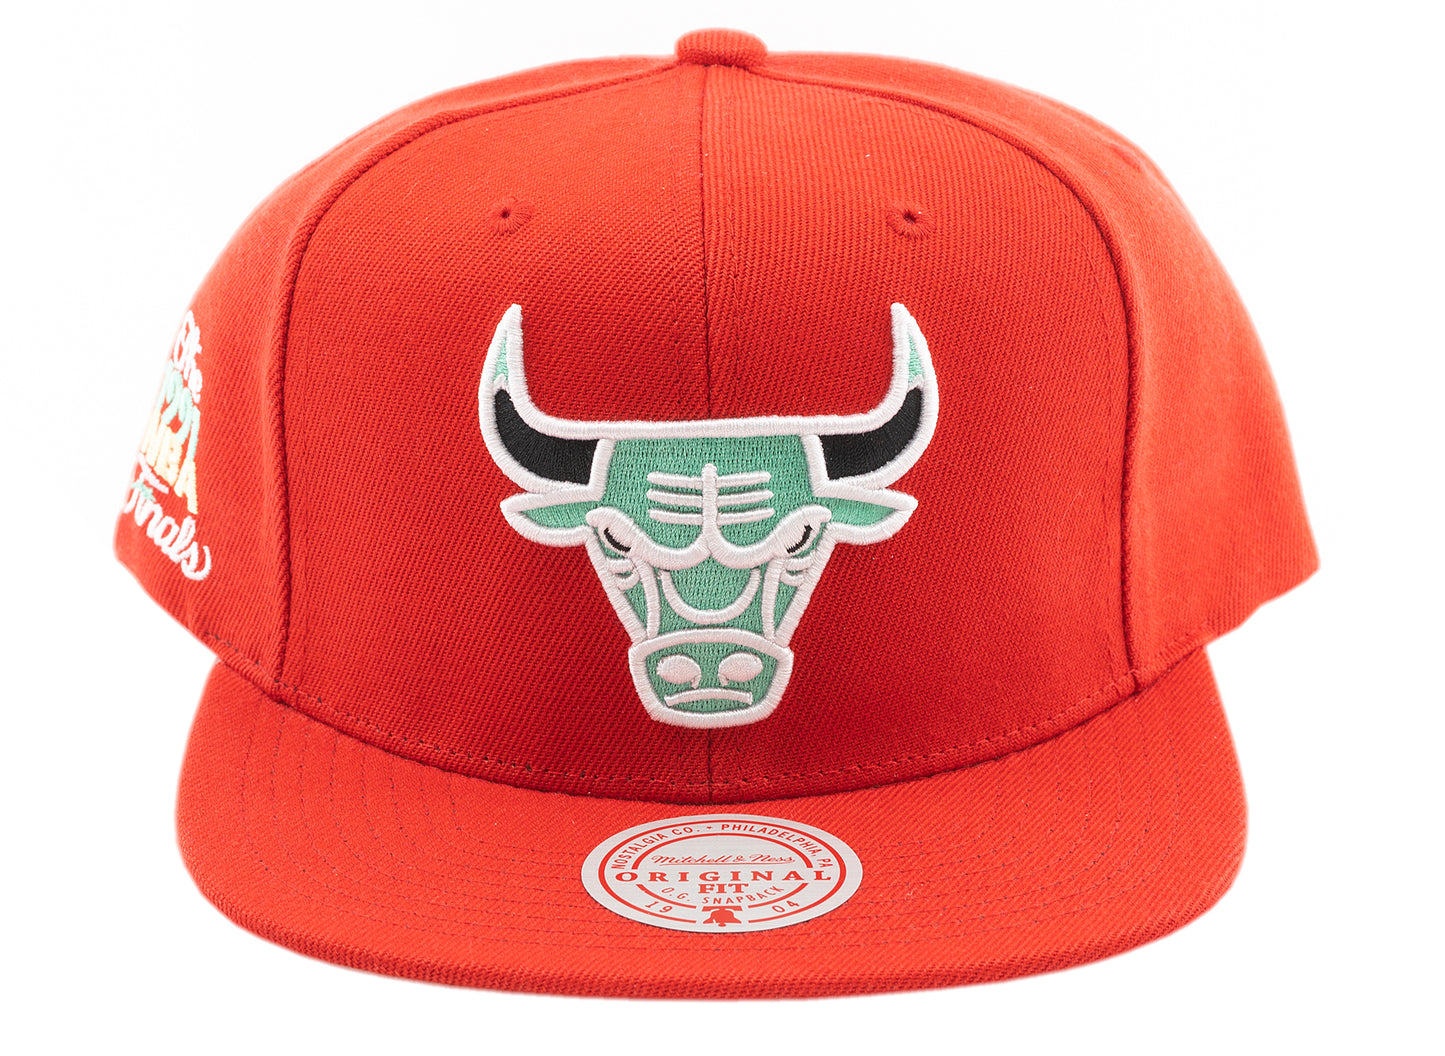 Chicago Bulls Snapback Cap by Mitchell & Ness